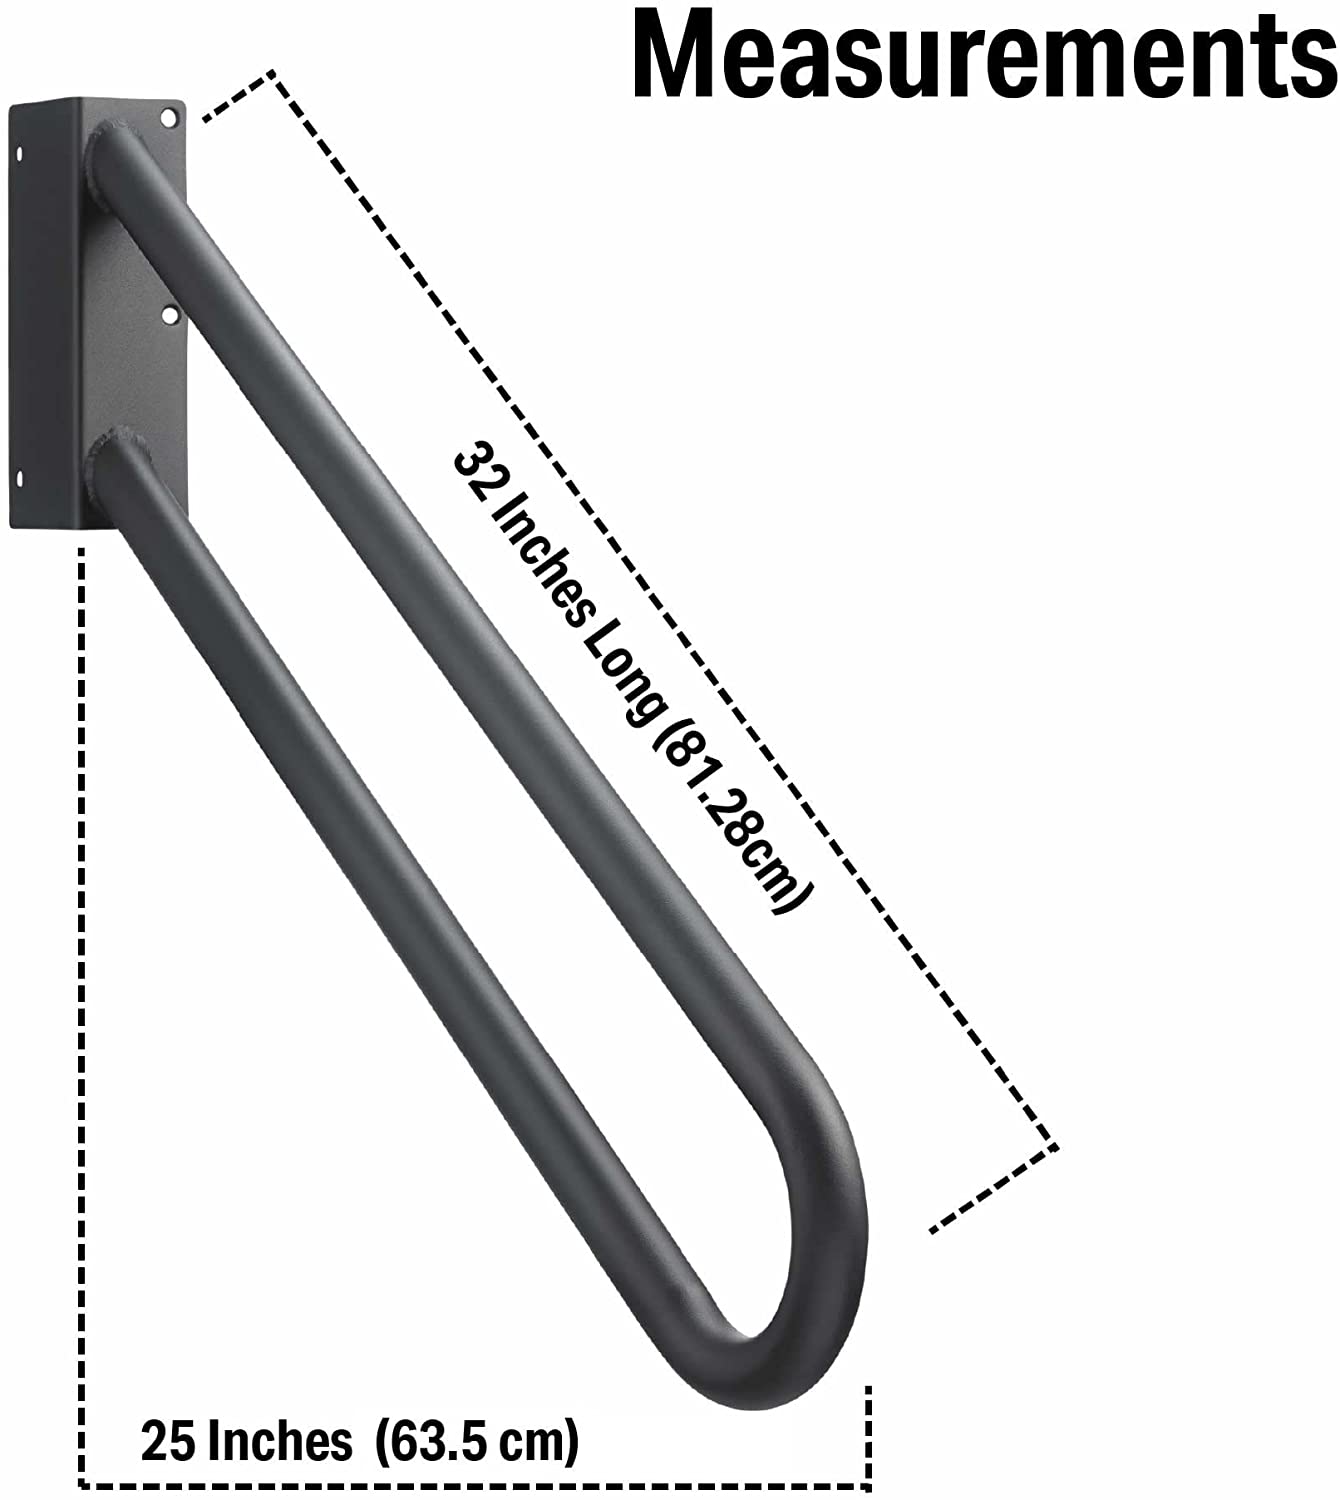 32 inch jamb mount handrail dimensions diagram